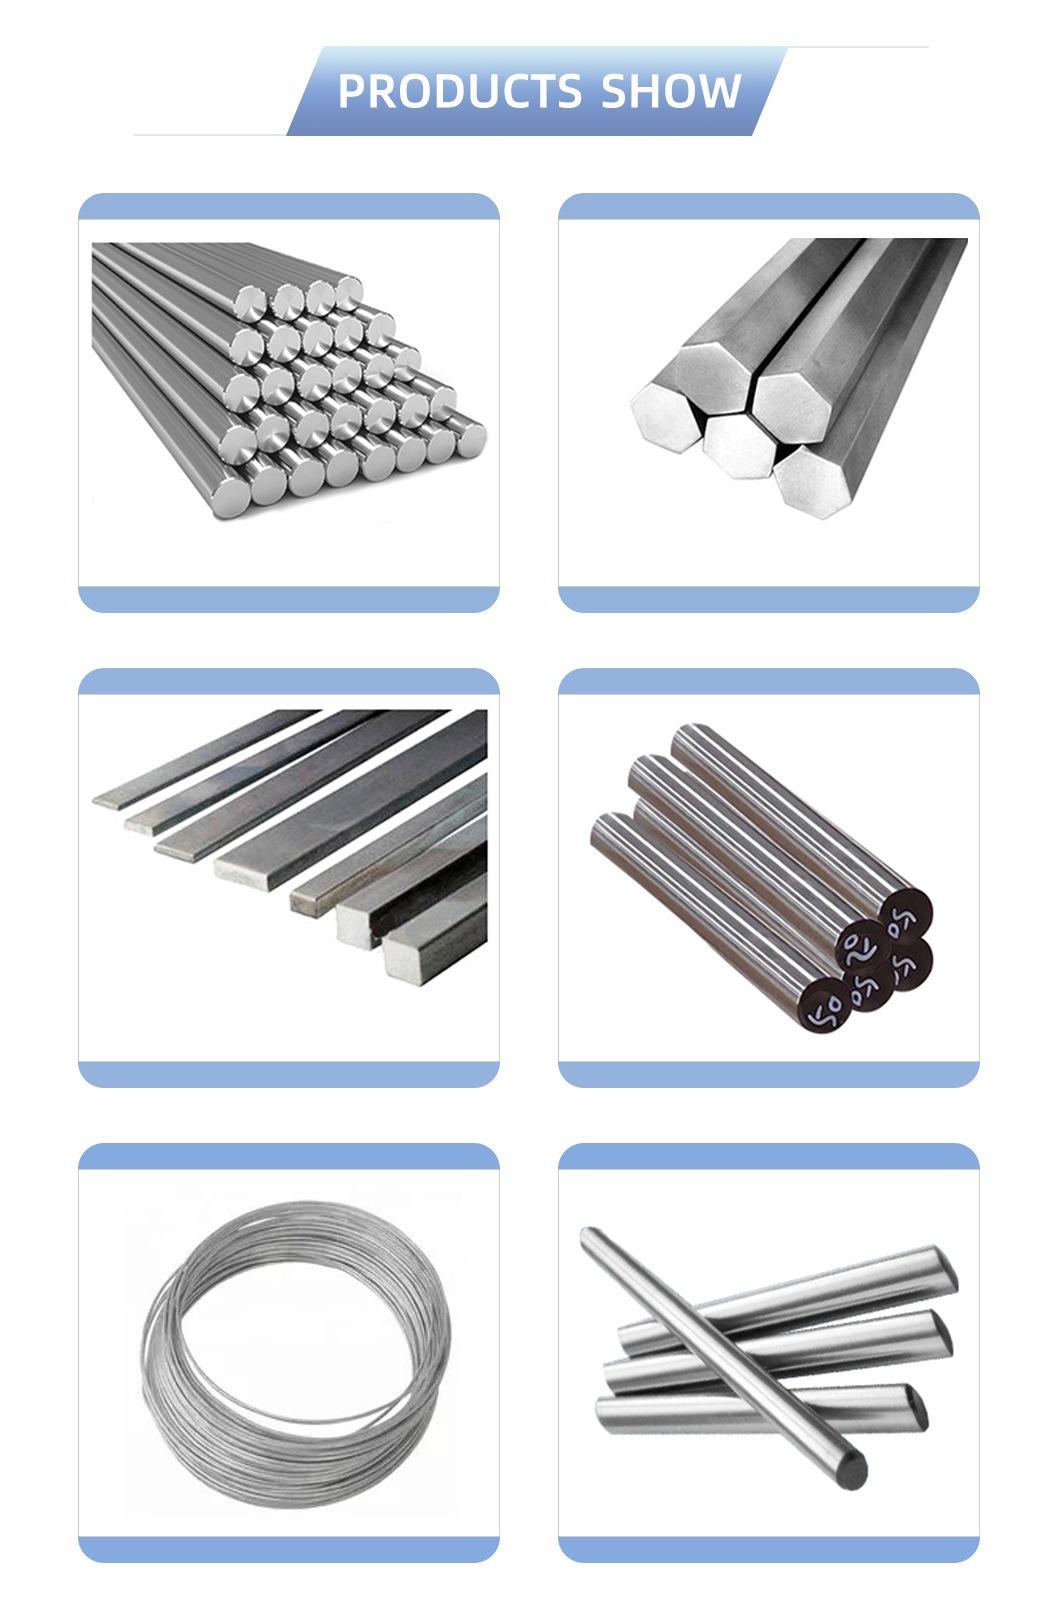 China Supplier Mild Steel Round Bar (Q235B Q345B Q235 Q345)